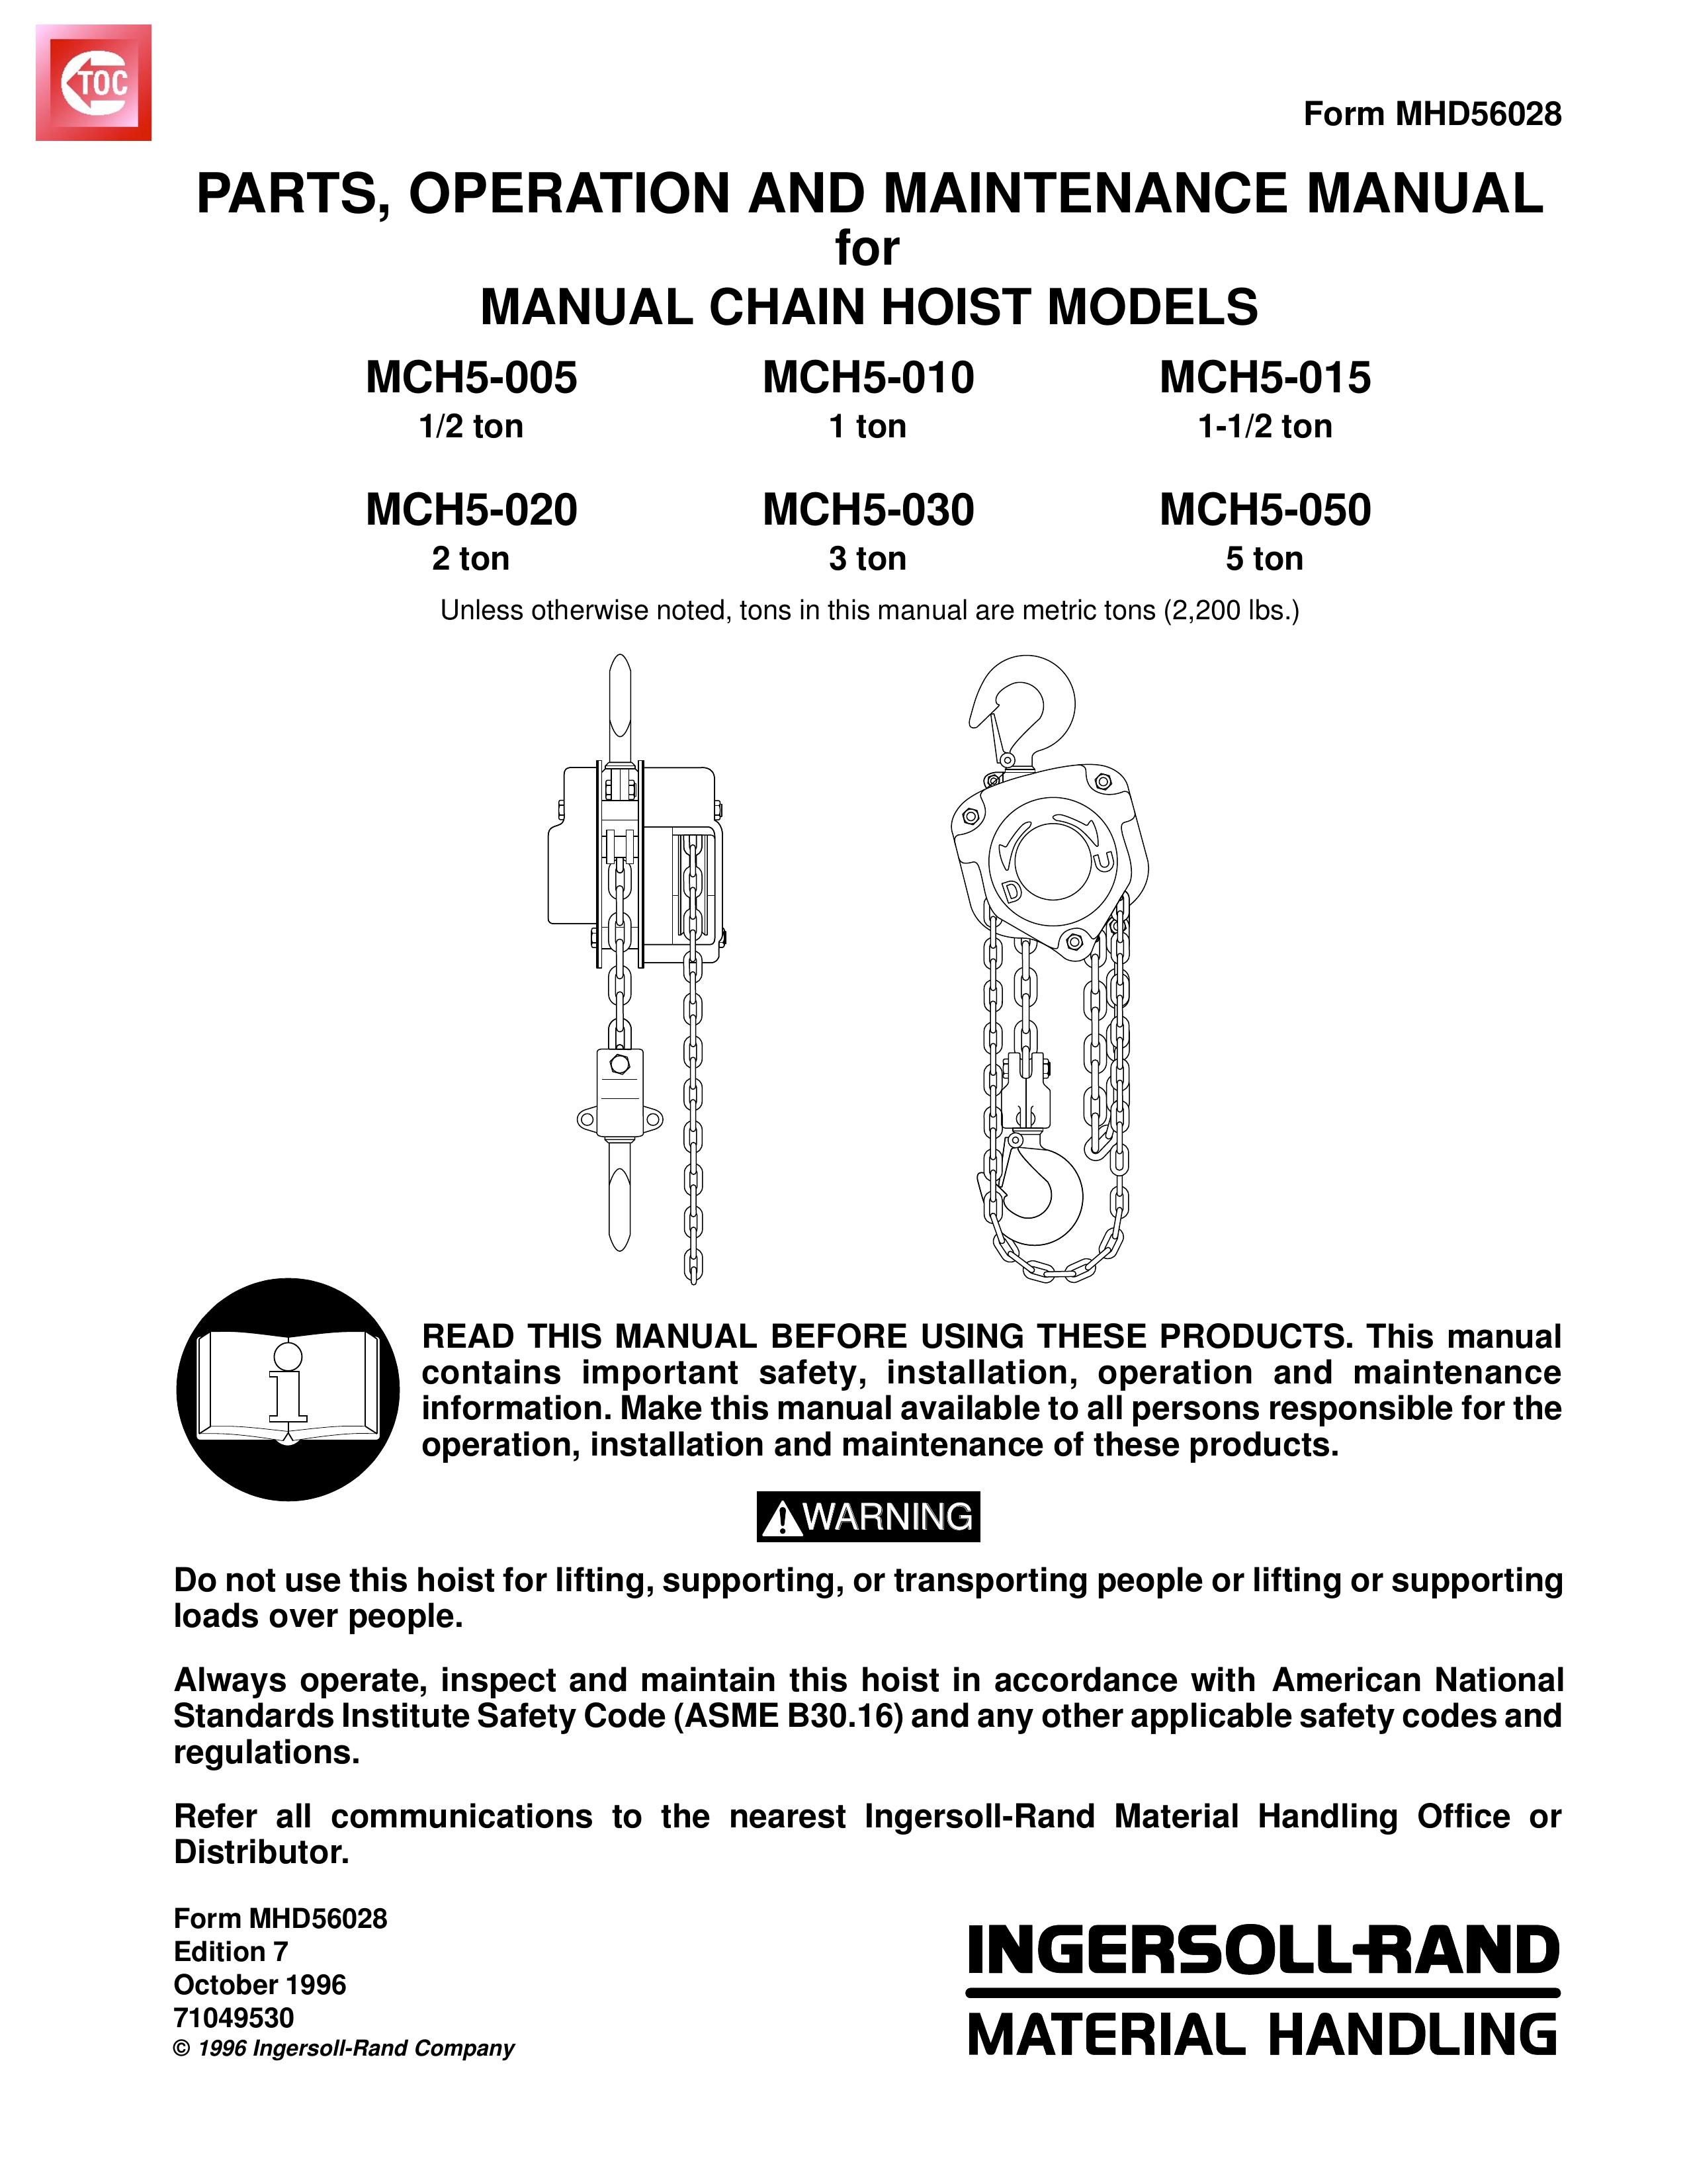 Ingersoll-Rand MCH5-015 Digital Photo Keychain User Manual